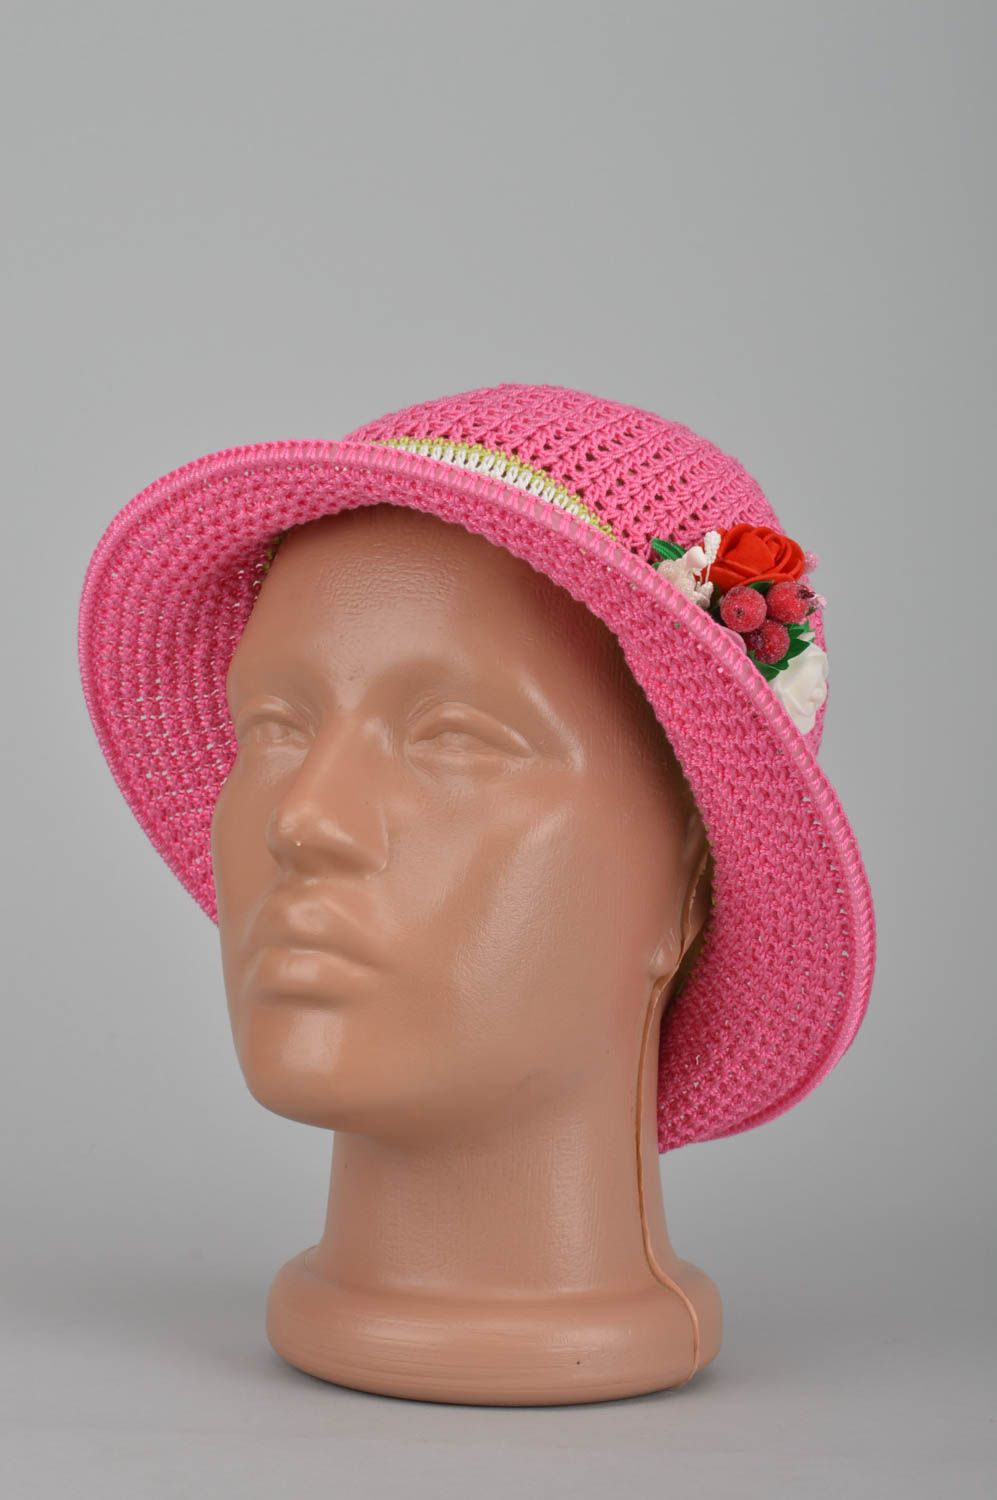 Beautiful handmade crochet hat fashion accessories cute hats crochet ideas photo 1